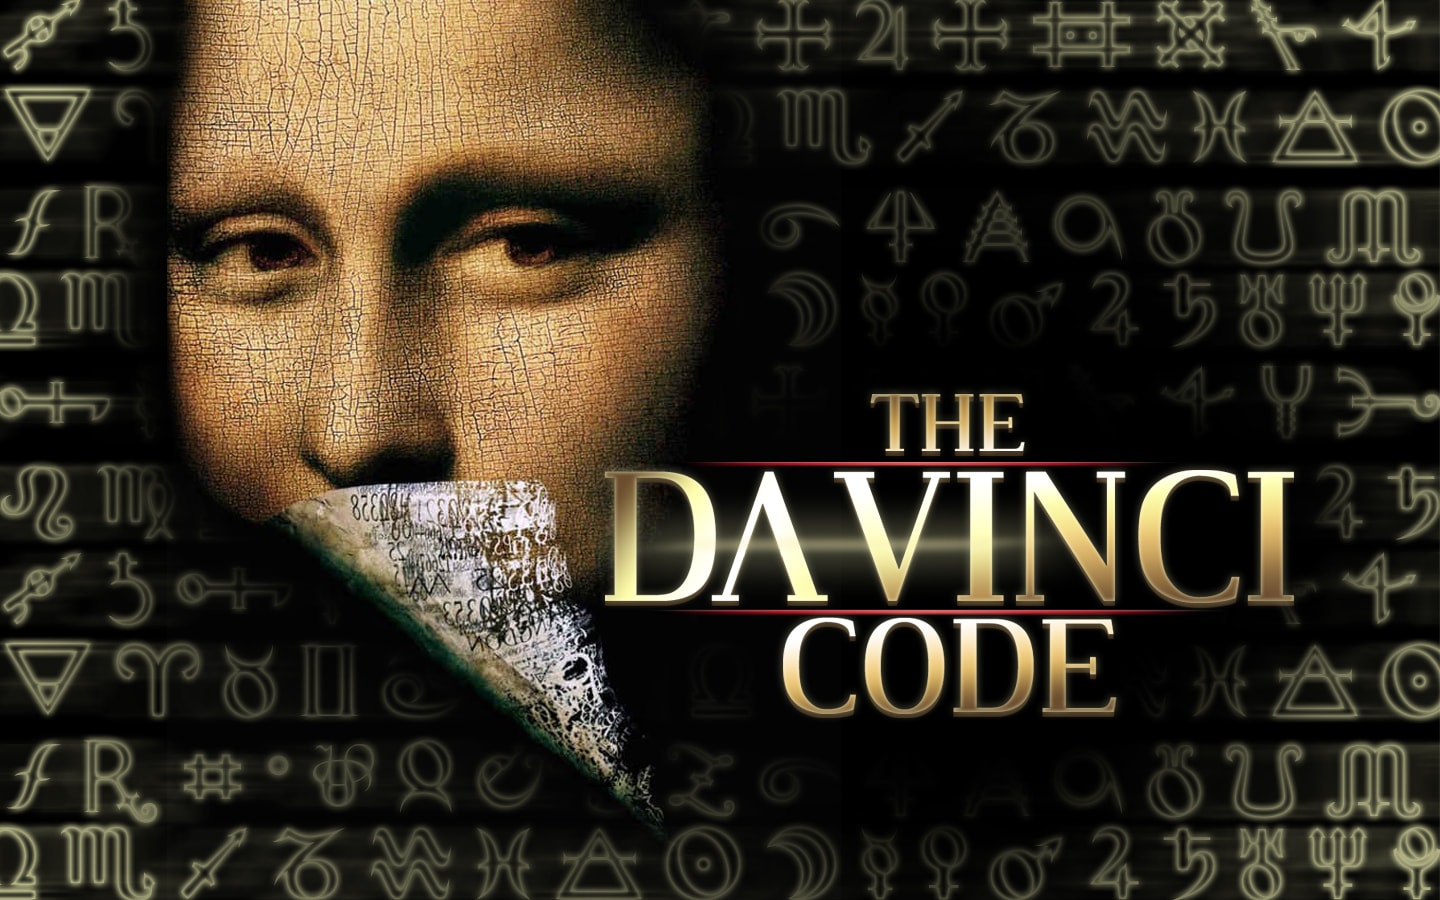 the da vinci code movie online free megavideo